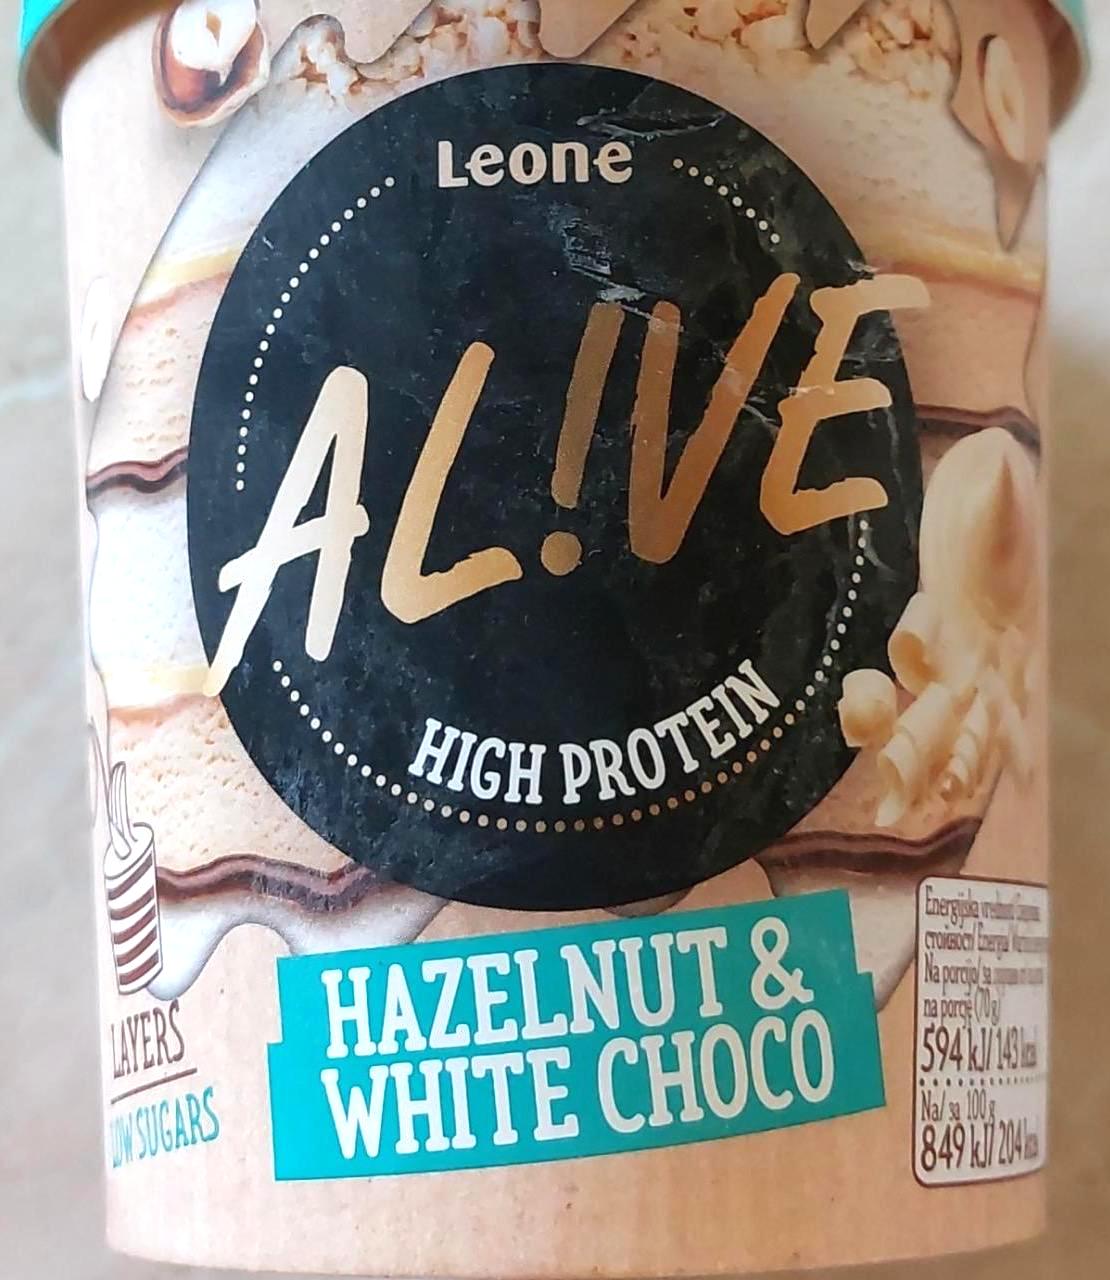 Képek - Alive High protein Hazelnut & white choco Leone